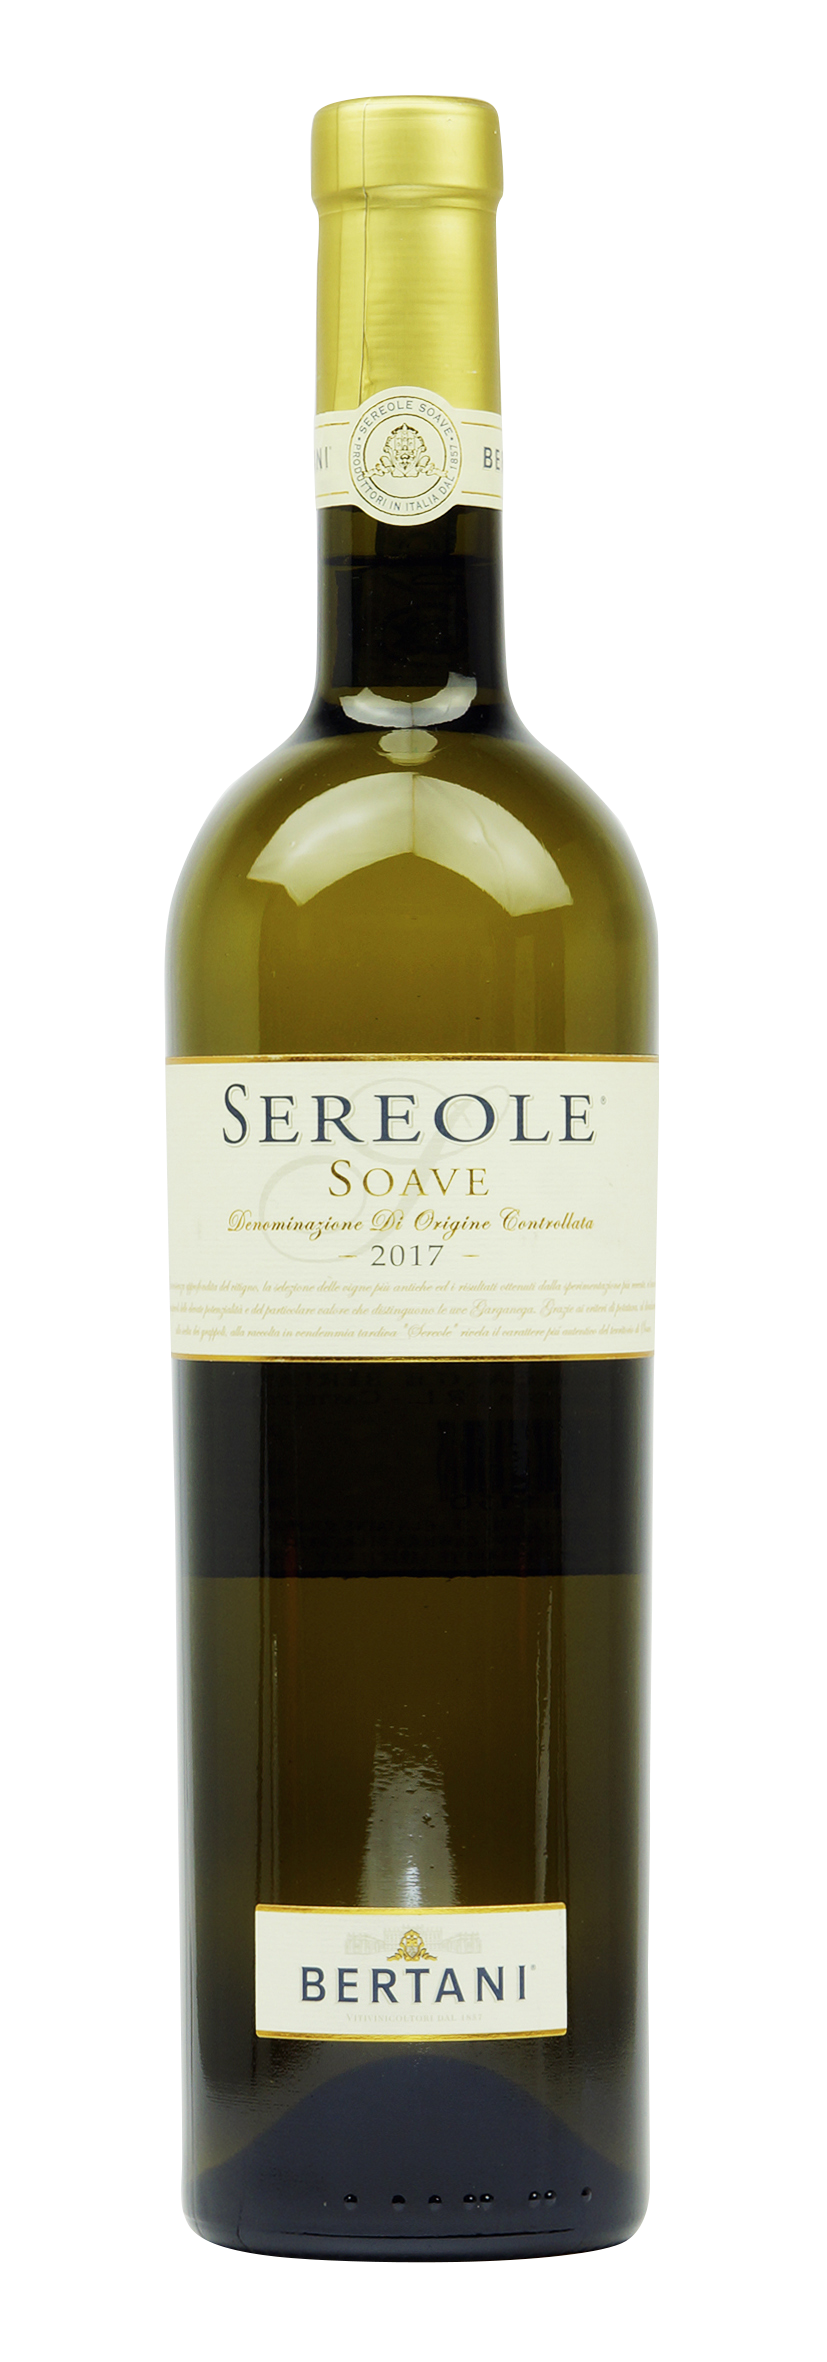 Soave DOC Sereole 2017